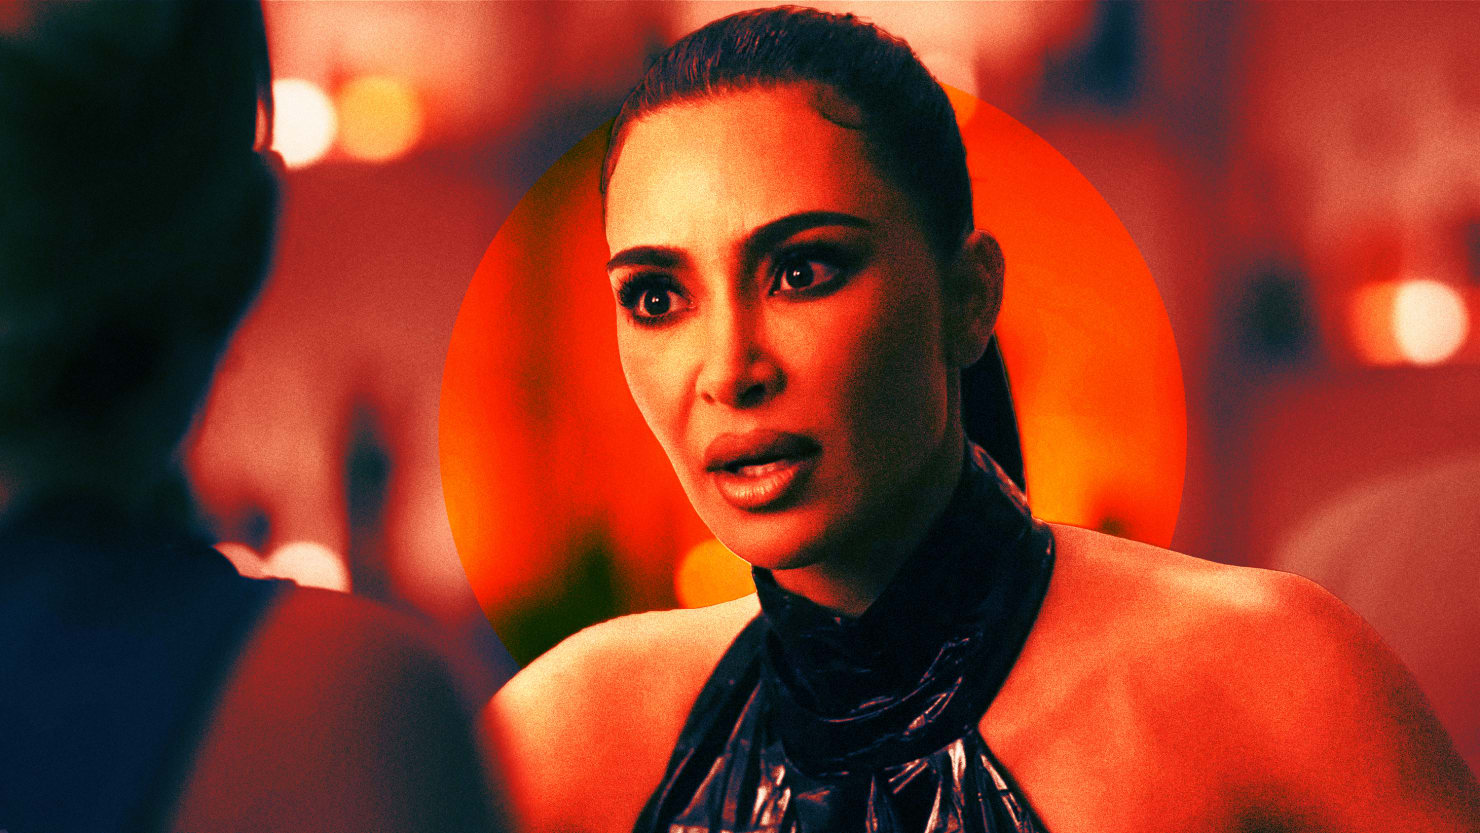 Kim Kardashian meets Roman Polanski (?!) in American Horror Story: Delicate